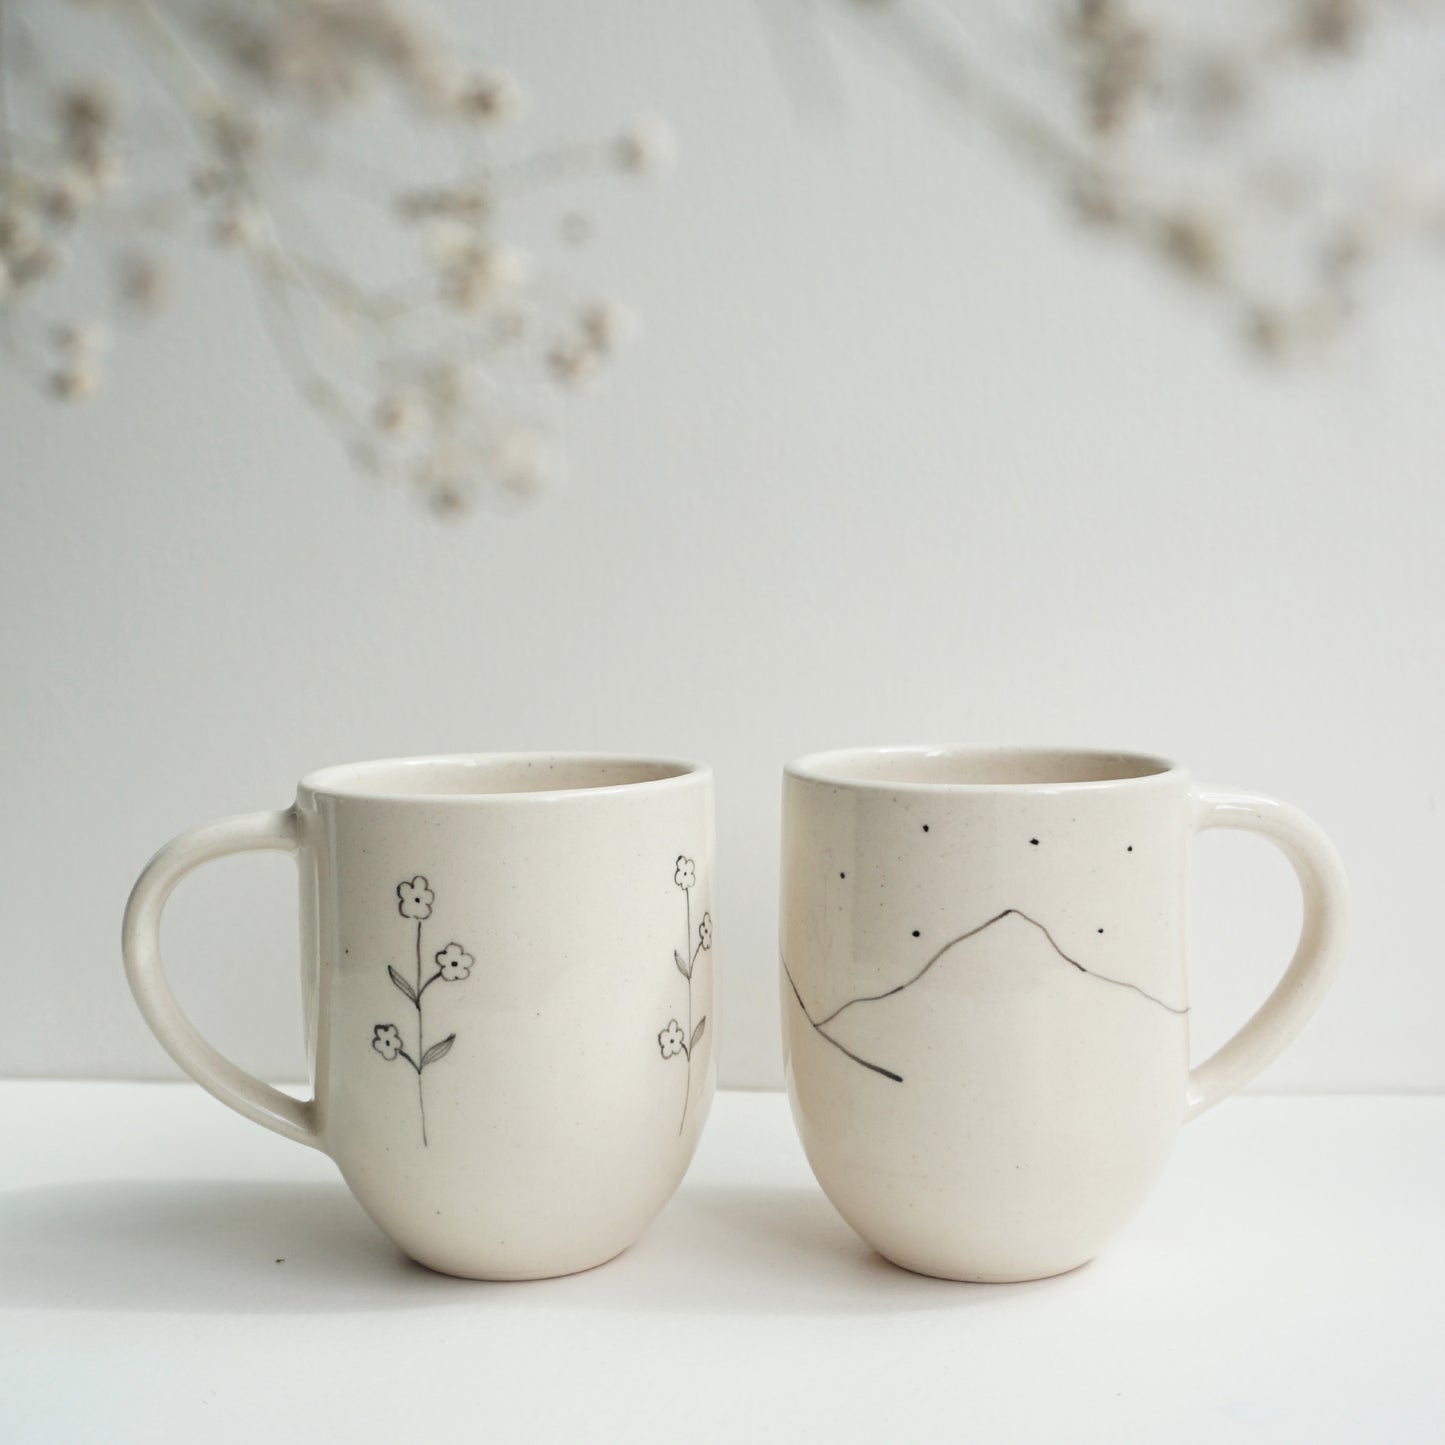 Hills & Wildflowers Coffee Mugs (Set of 2)